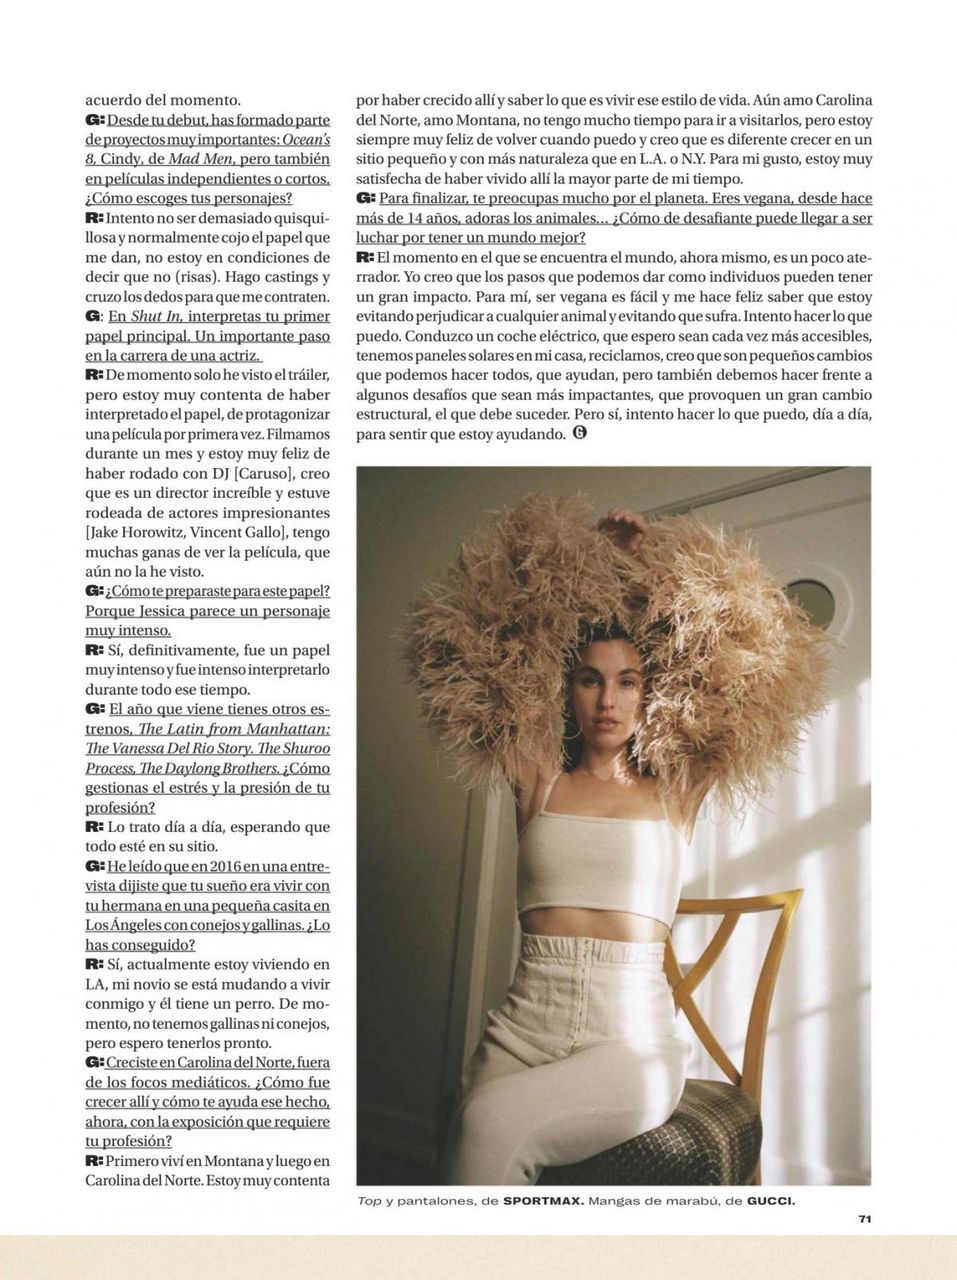 Rainey Qualley Glamour Magazine Spain February